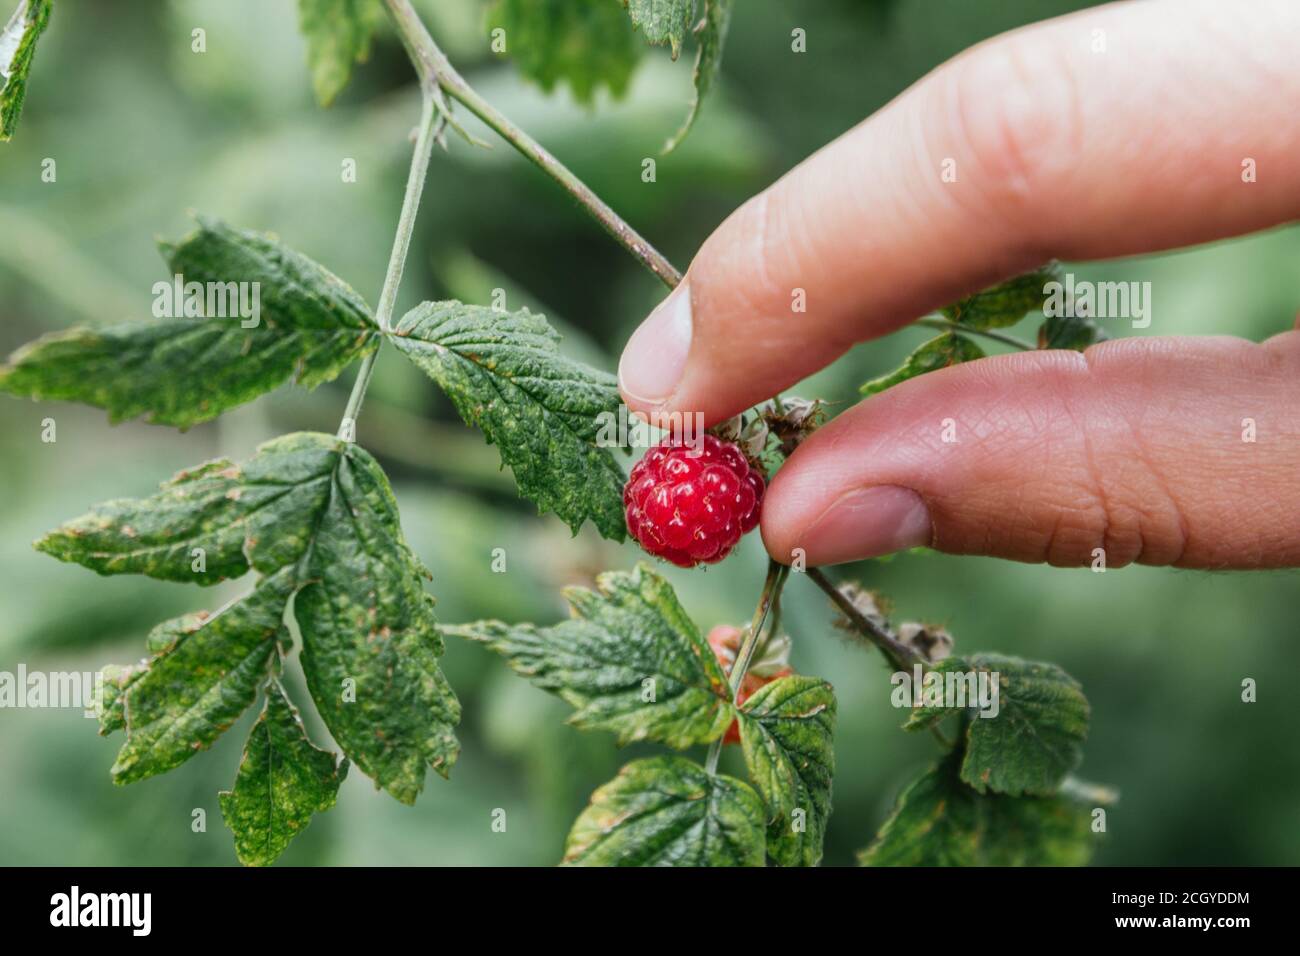 https://c8.alamy.com/comp/2CGYDDM/stock-photo-of-a-fingers-picking-a-wild-raspberry-2CGYDDM.jpg